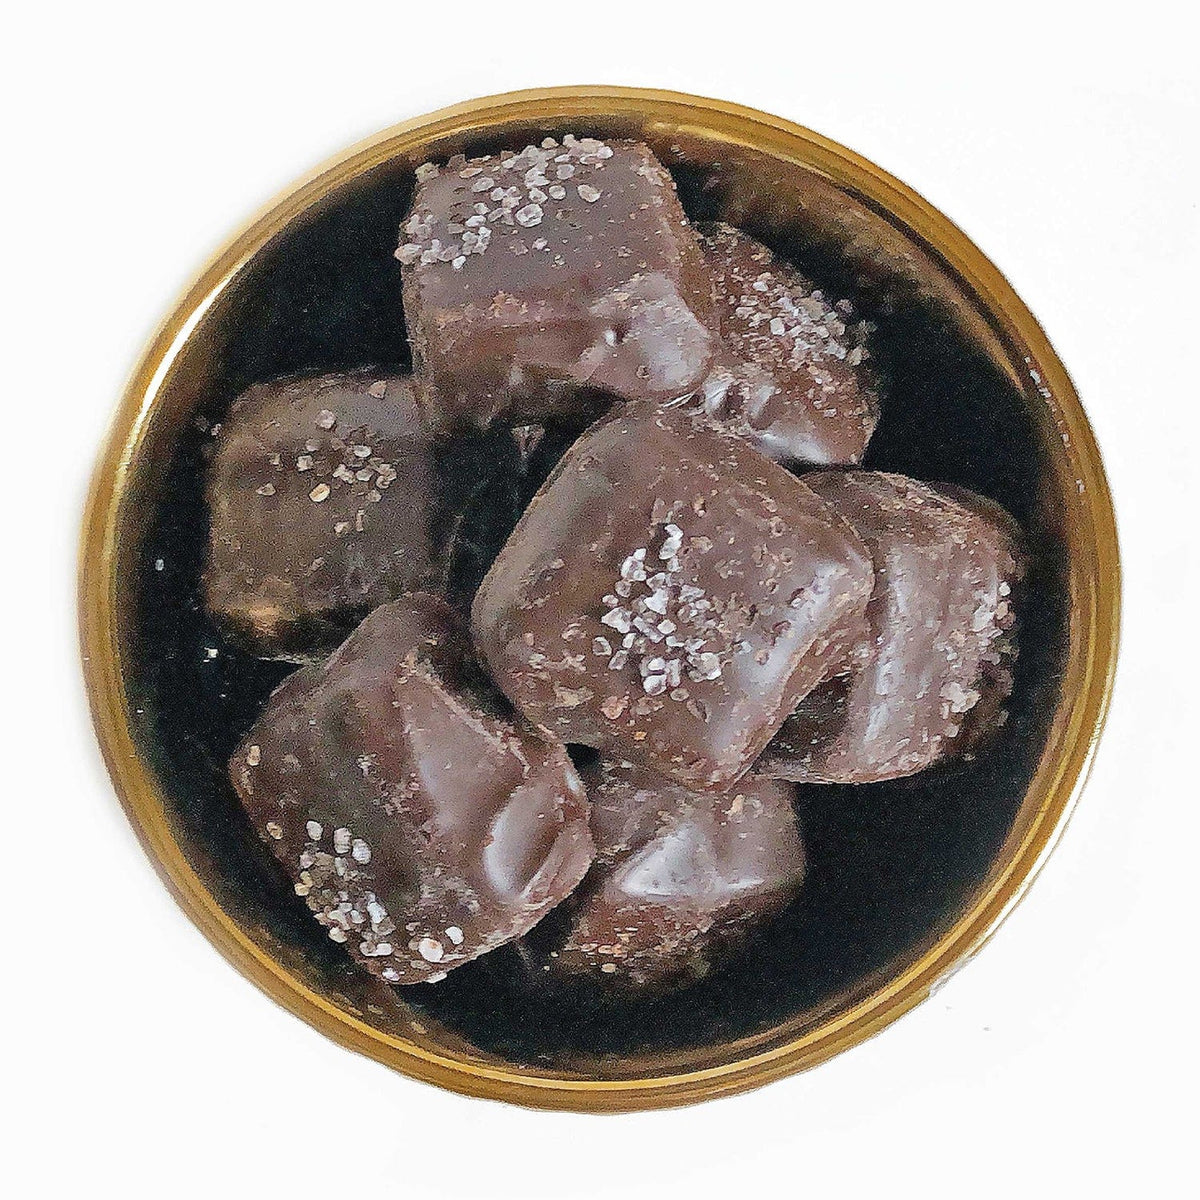 Lolli and Pops Bulk Dark Chocolate Sea Salt Caramels